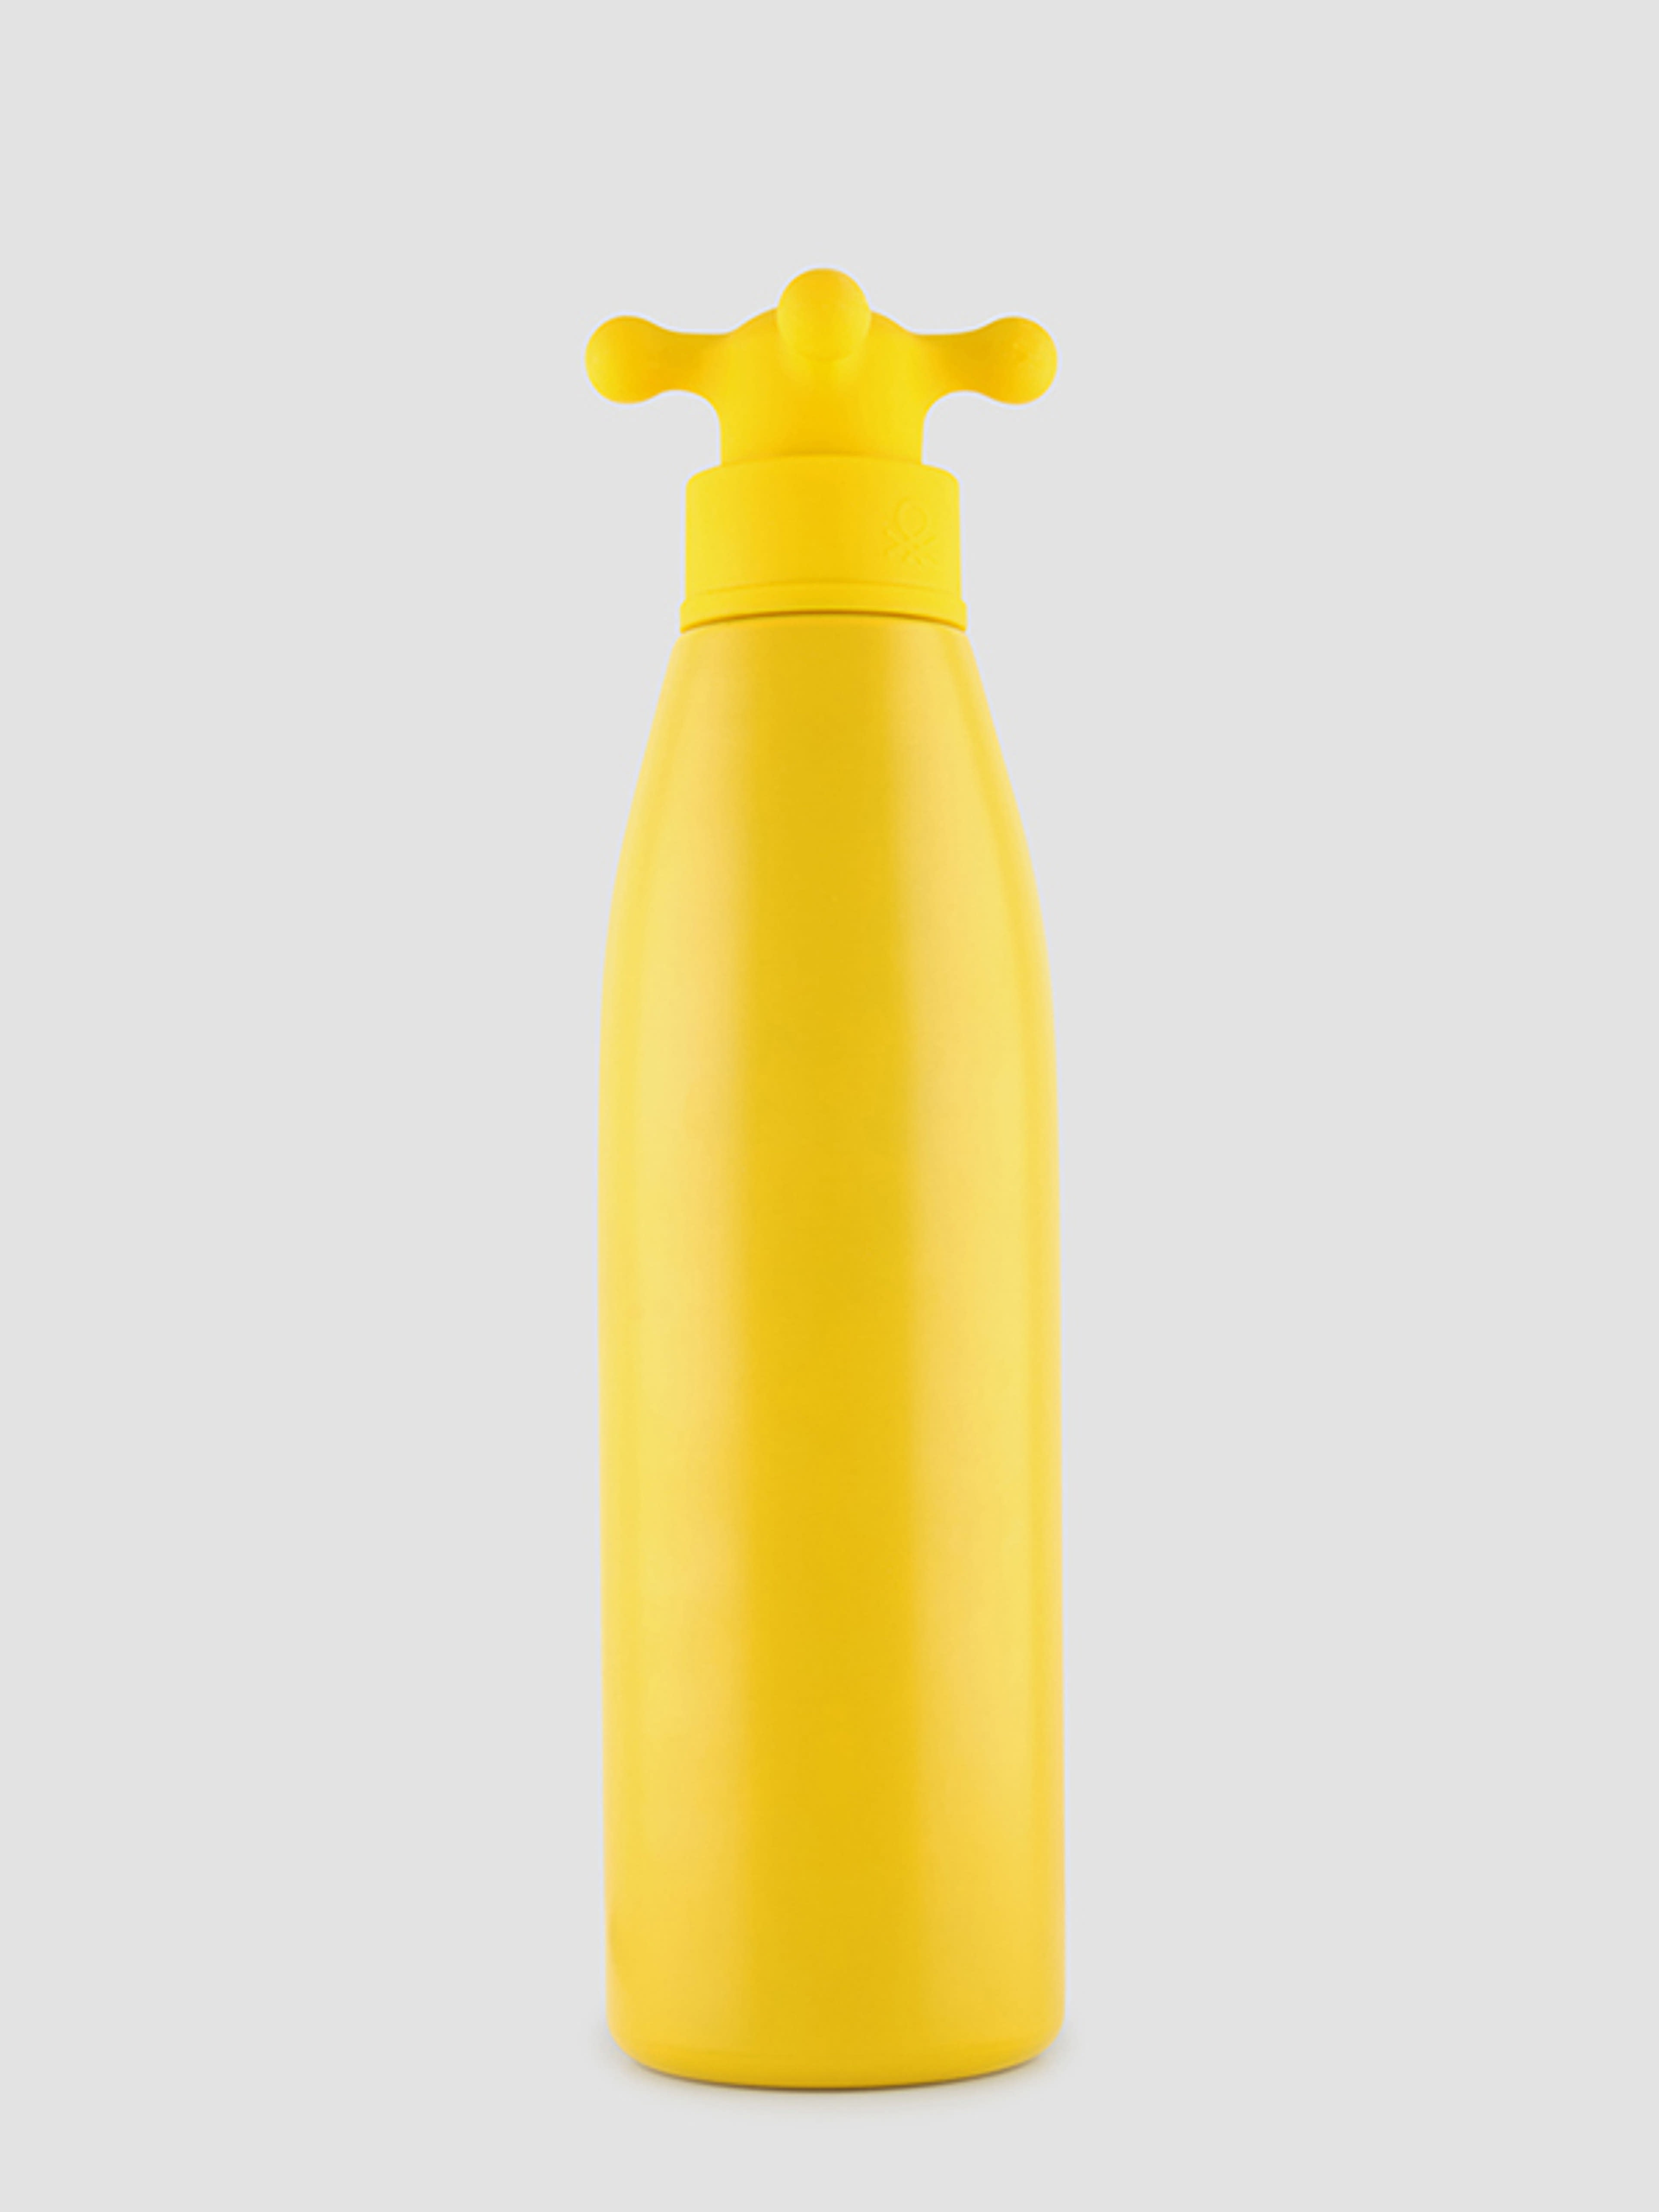 Benetton rozsdamentes palack, sárga 750 ml - 1 db